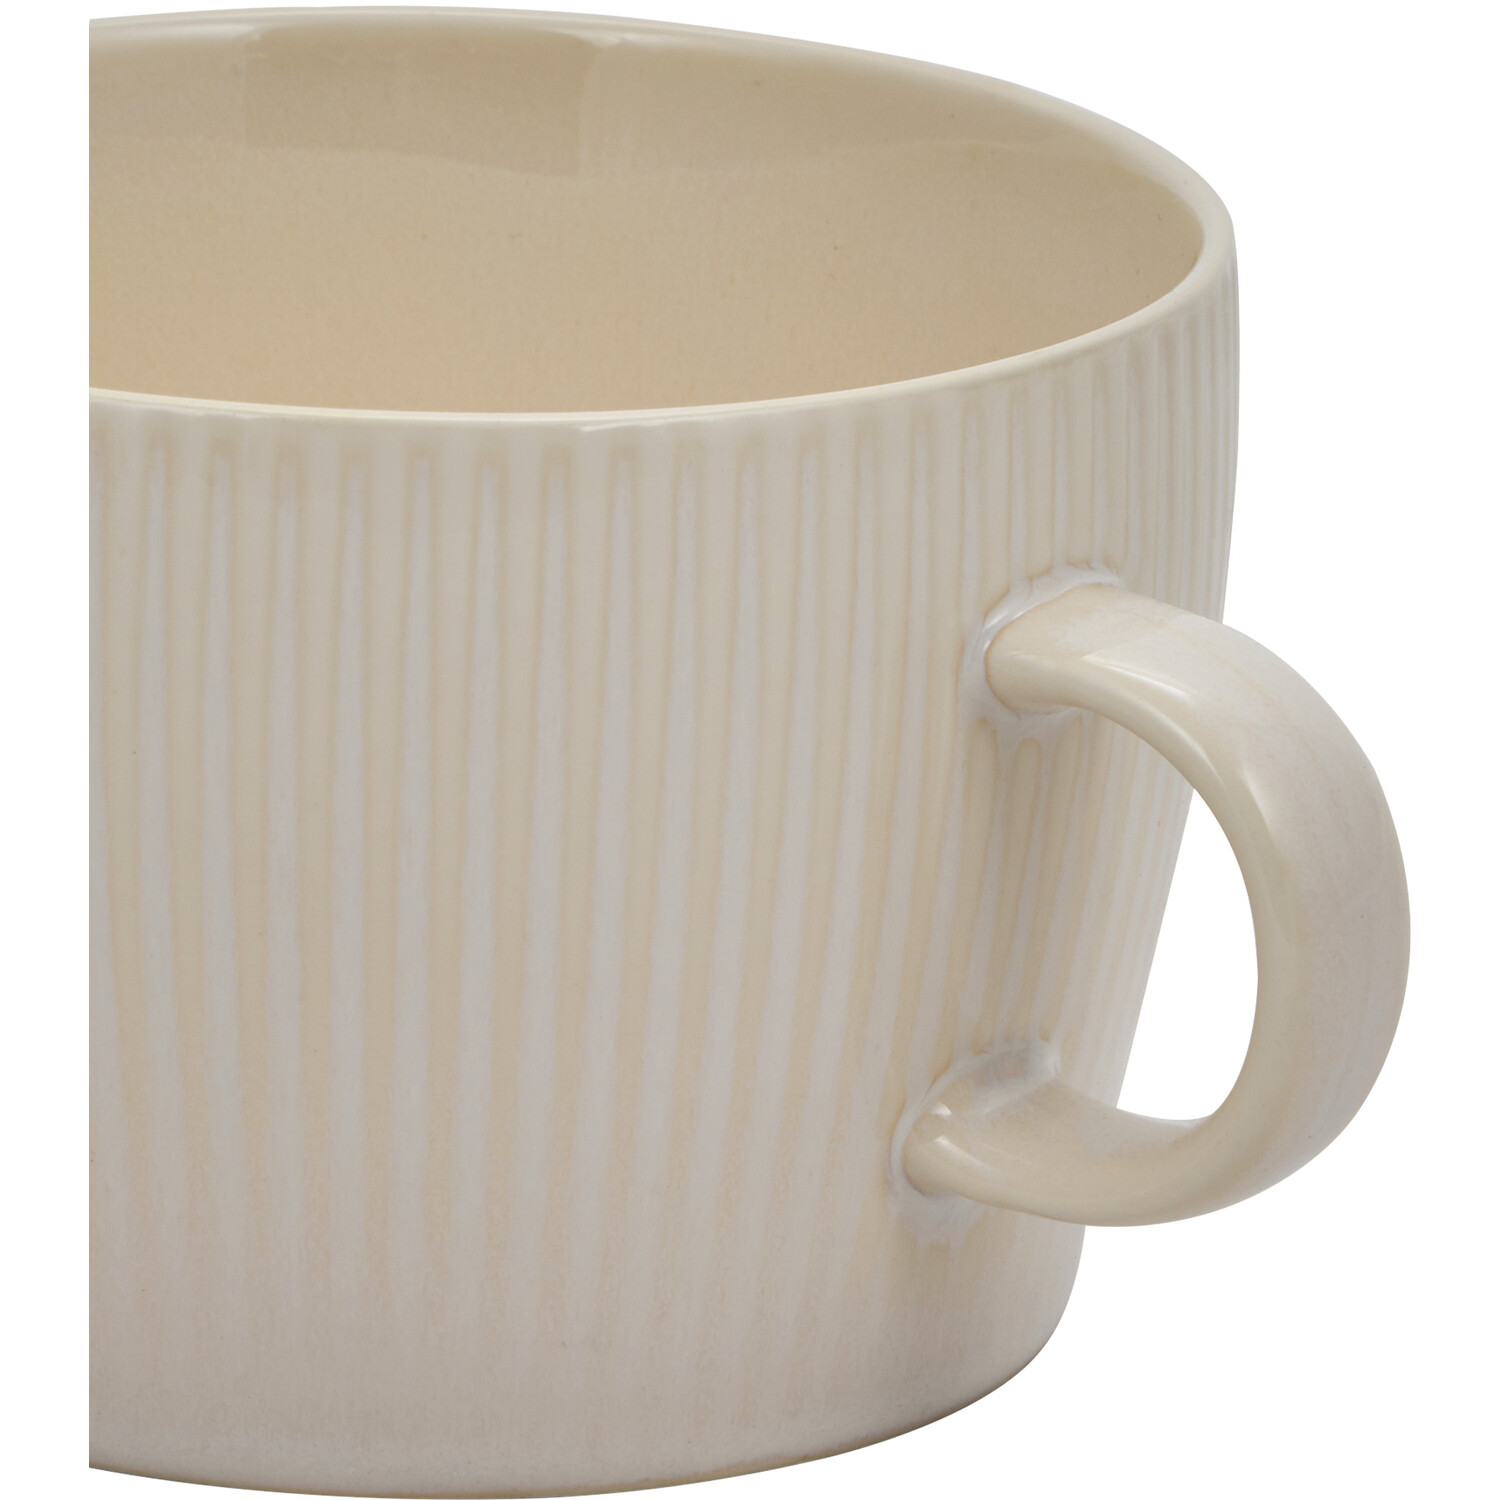 Ceramic Mug - White Image 2